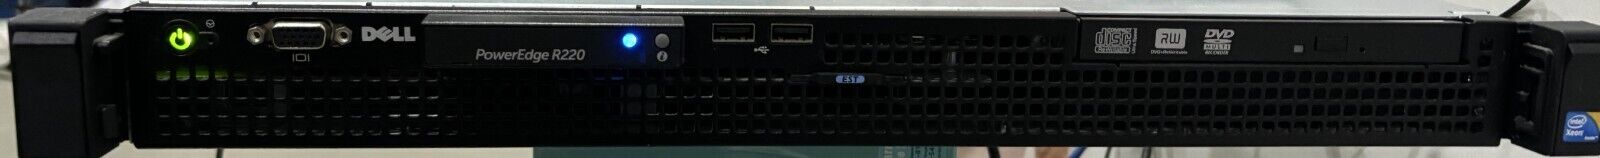 Dell PowerEdge R220 1U Short Depth Mini Server Xeon E3-1220 v3 3.10Ghz 32GB RAM